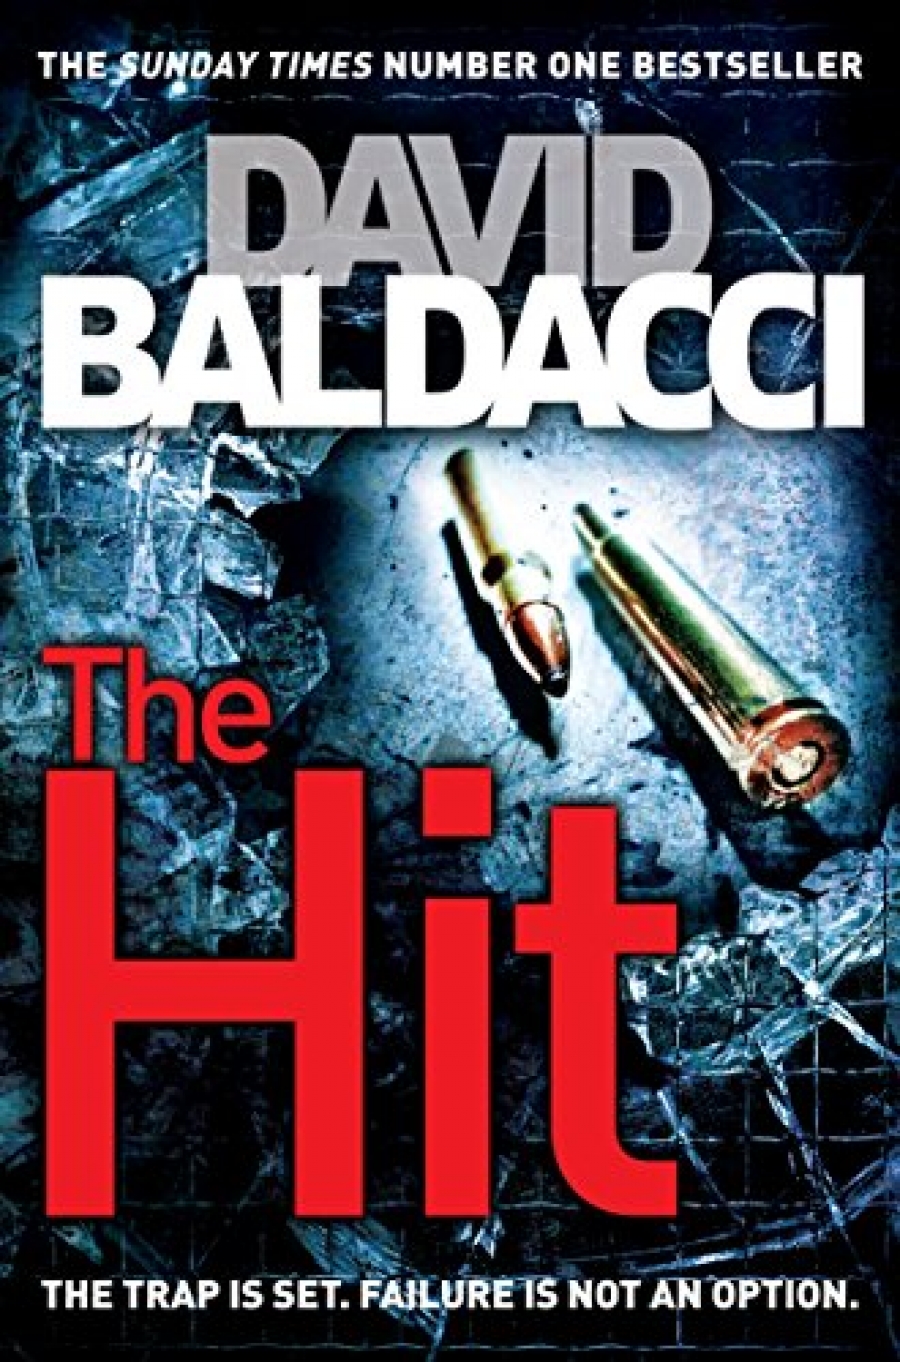 David Baldacci The Hit 